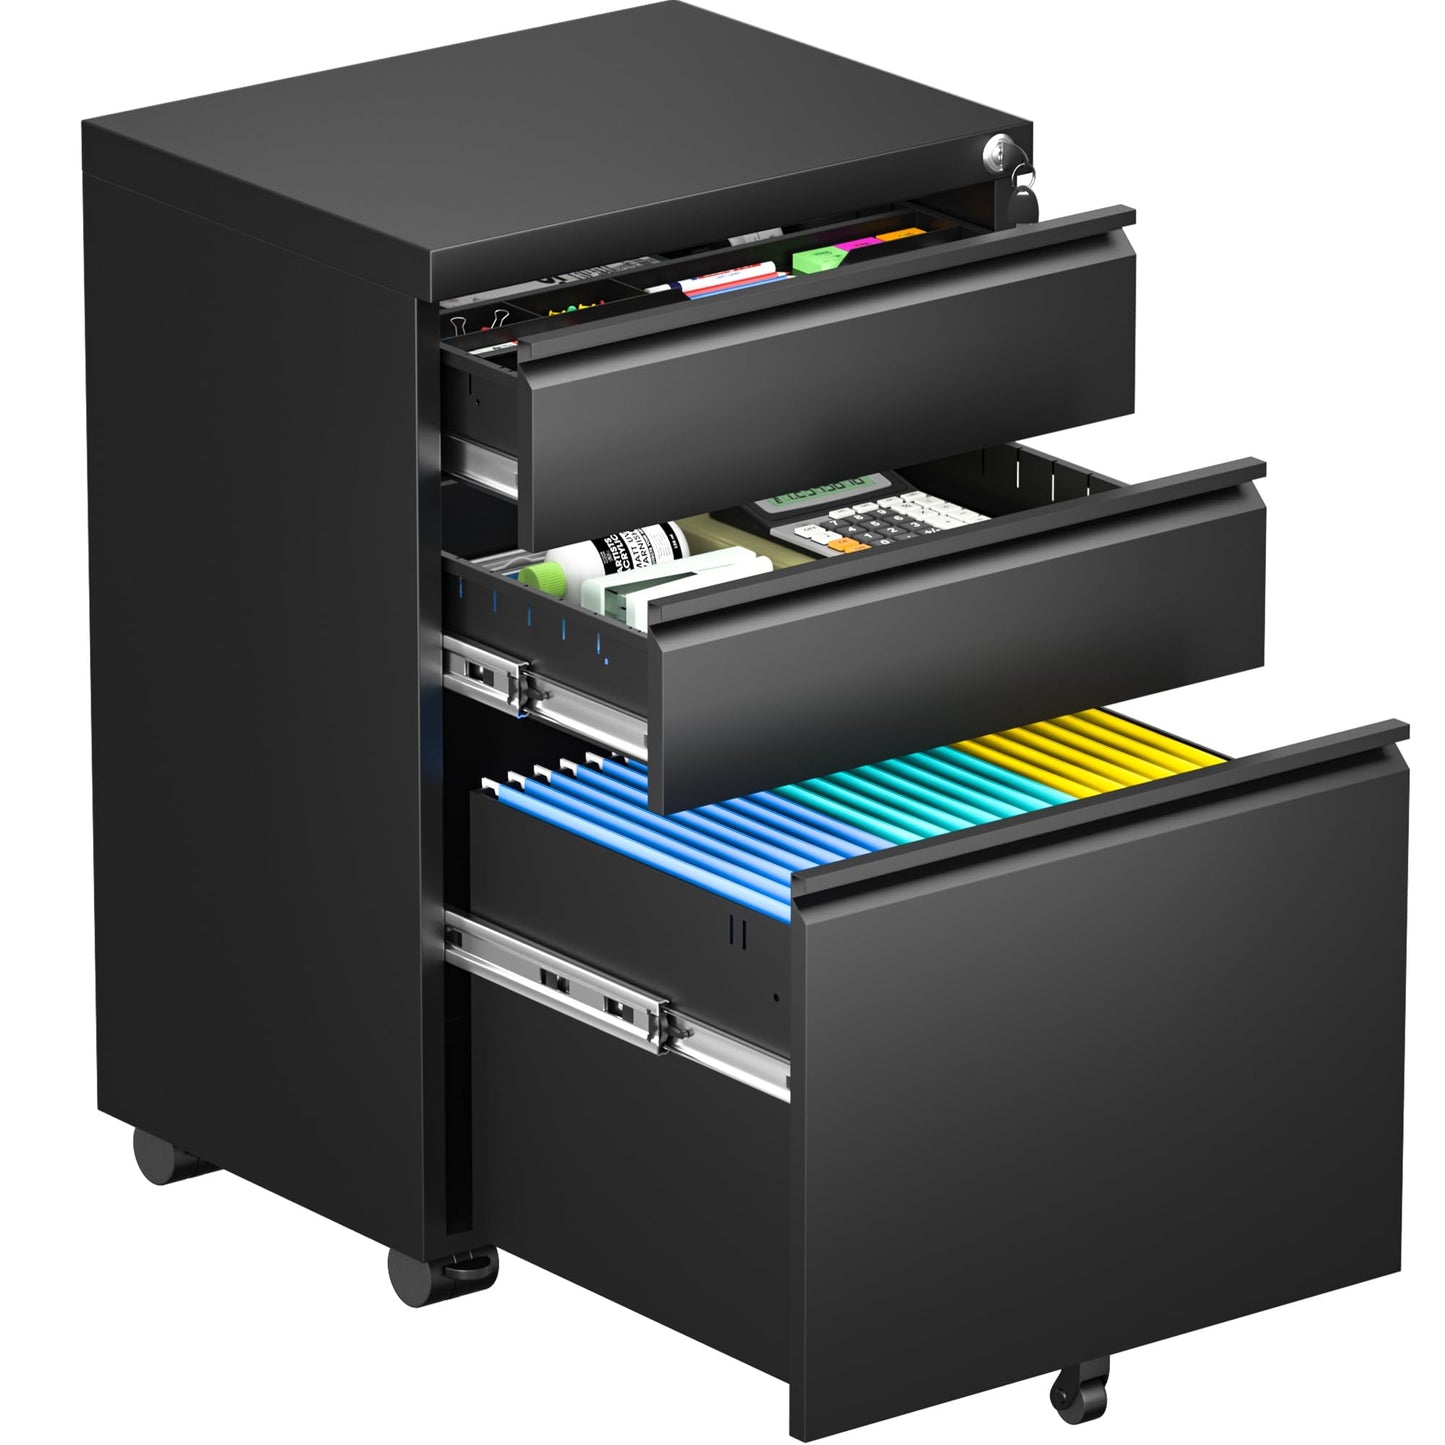 Bonusall Black File Cabinet, 3 Drawer Mobile File Cabinet with Lock and Wheels, Under Desk Metal Filing Cabinet for Office， Rolling Cabinet with 2